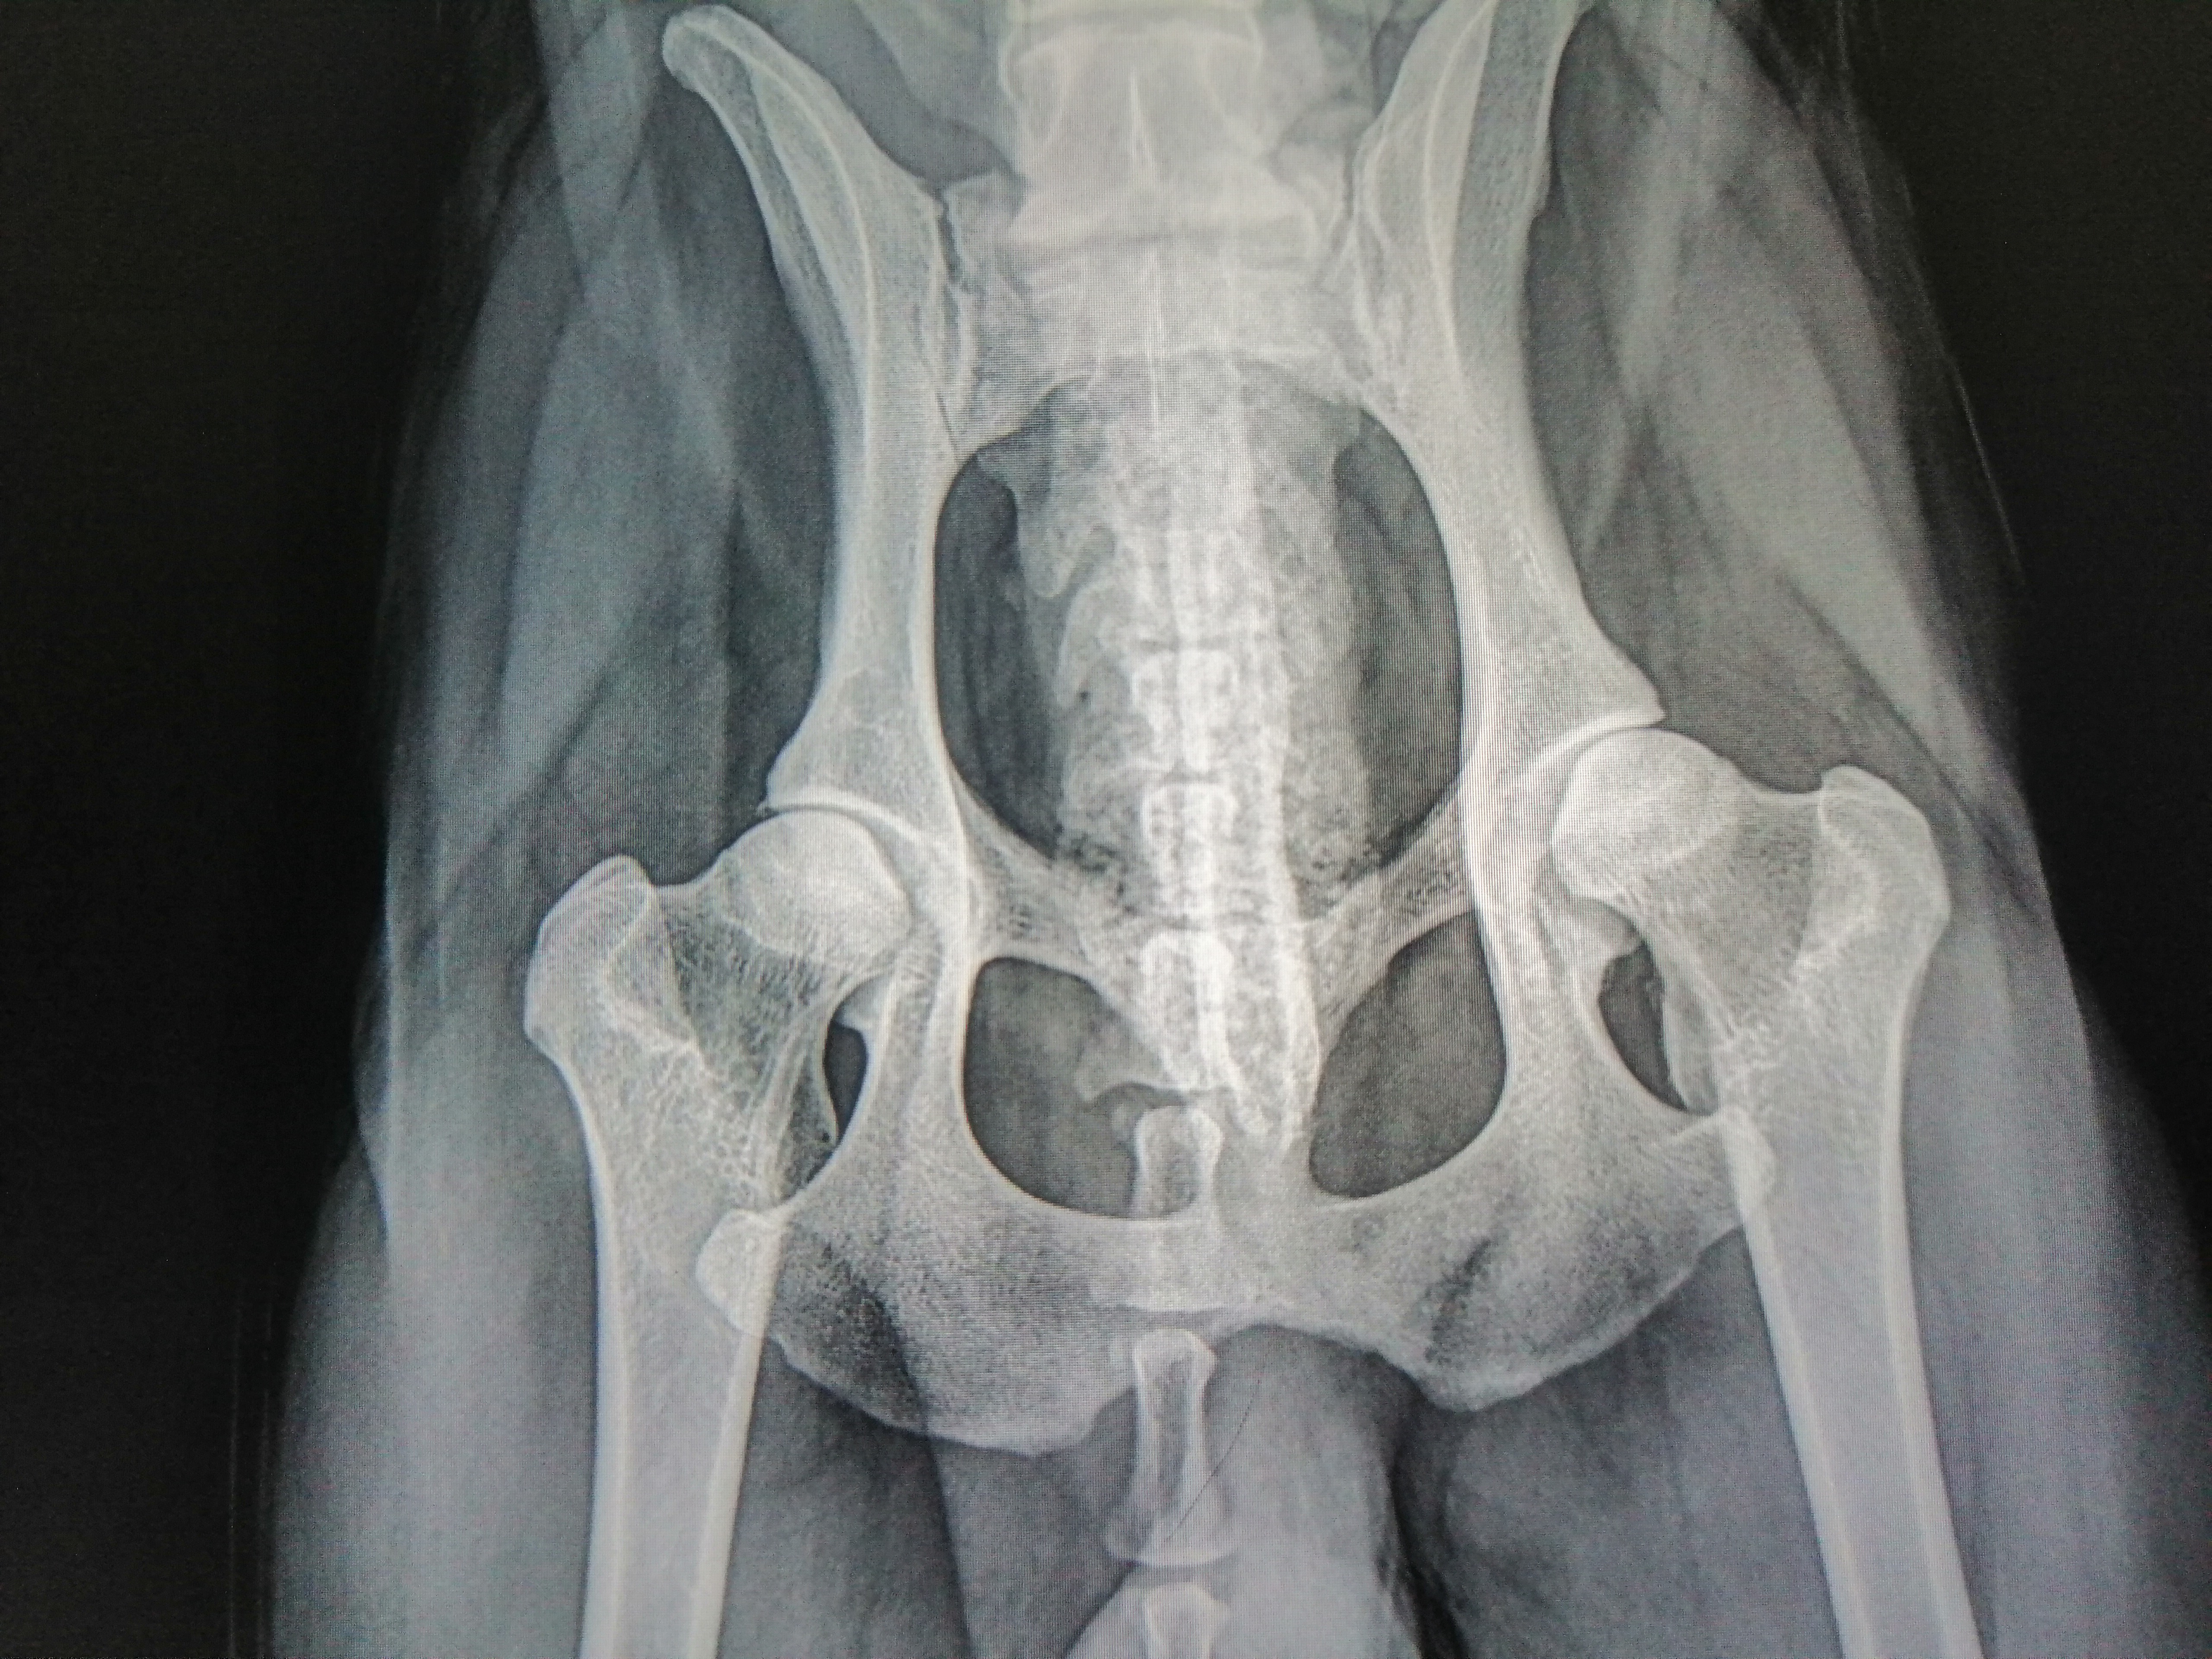 dog x-ray radiograph hips hip dysplasia arthritis osteoarthritis DJD degenerative joint diseases